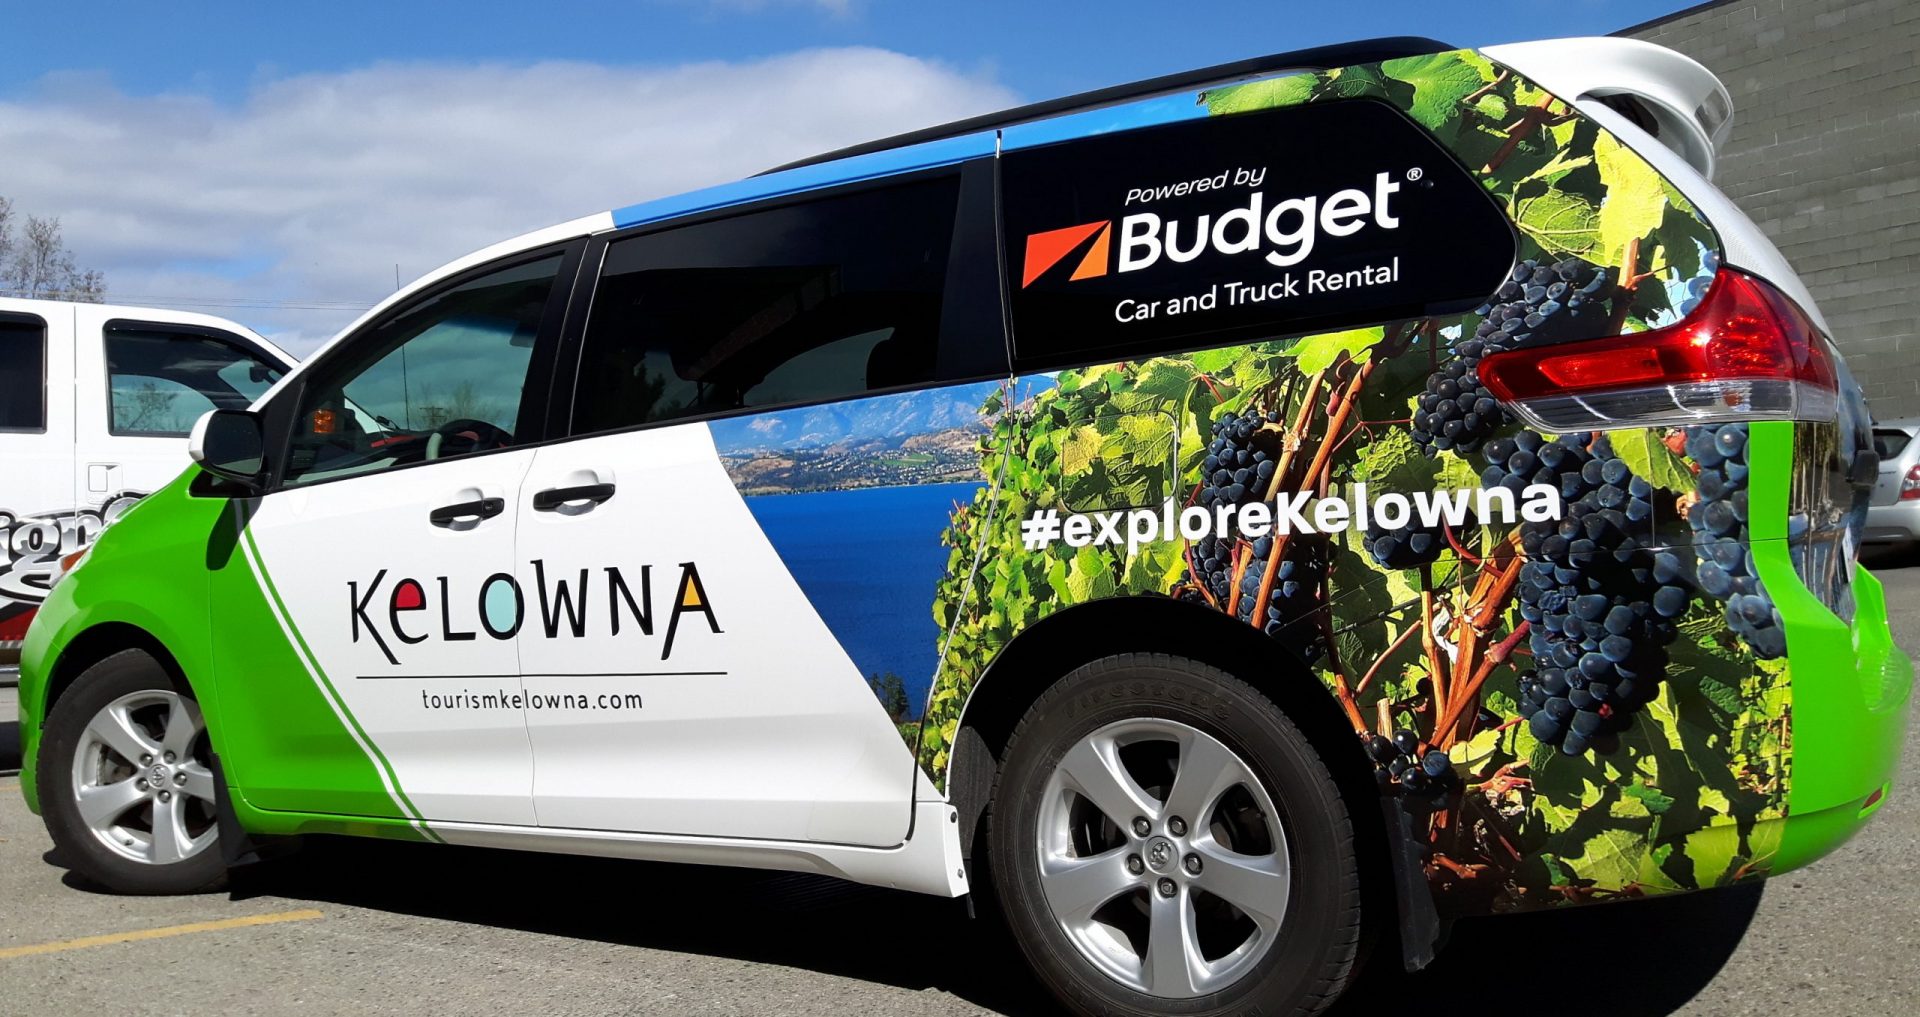 Kelowna Tourism Car 2018 scaled